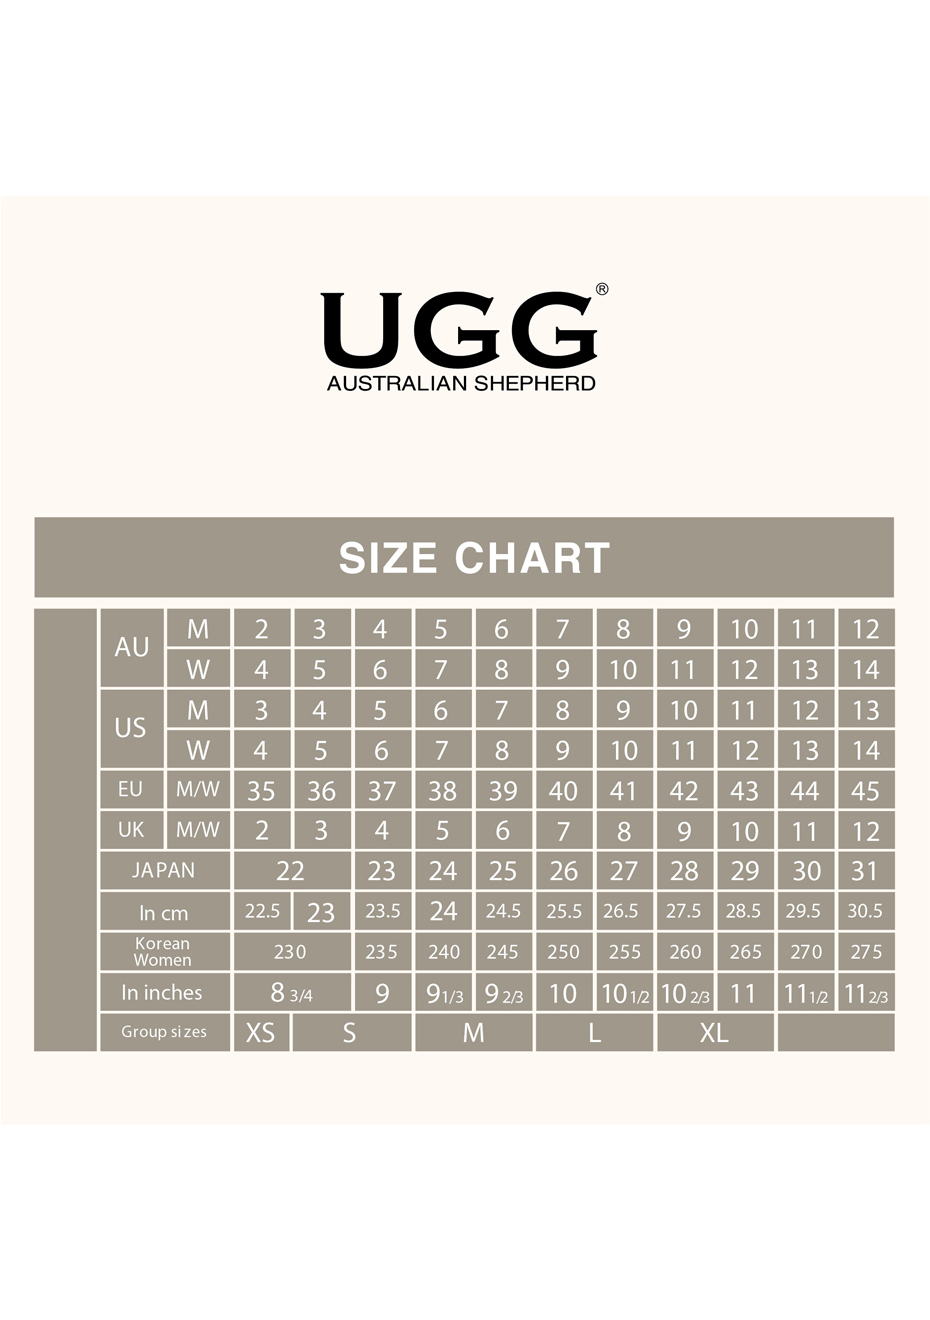 ugg size chart w8 - 14thbrooklyn 